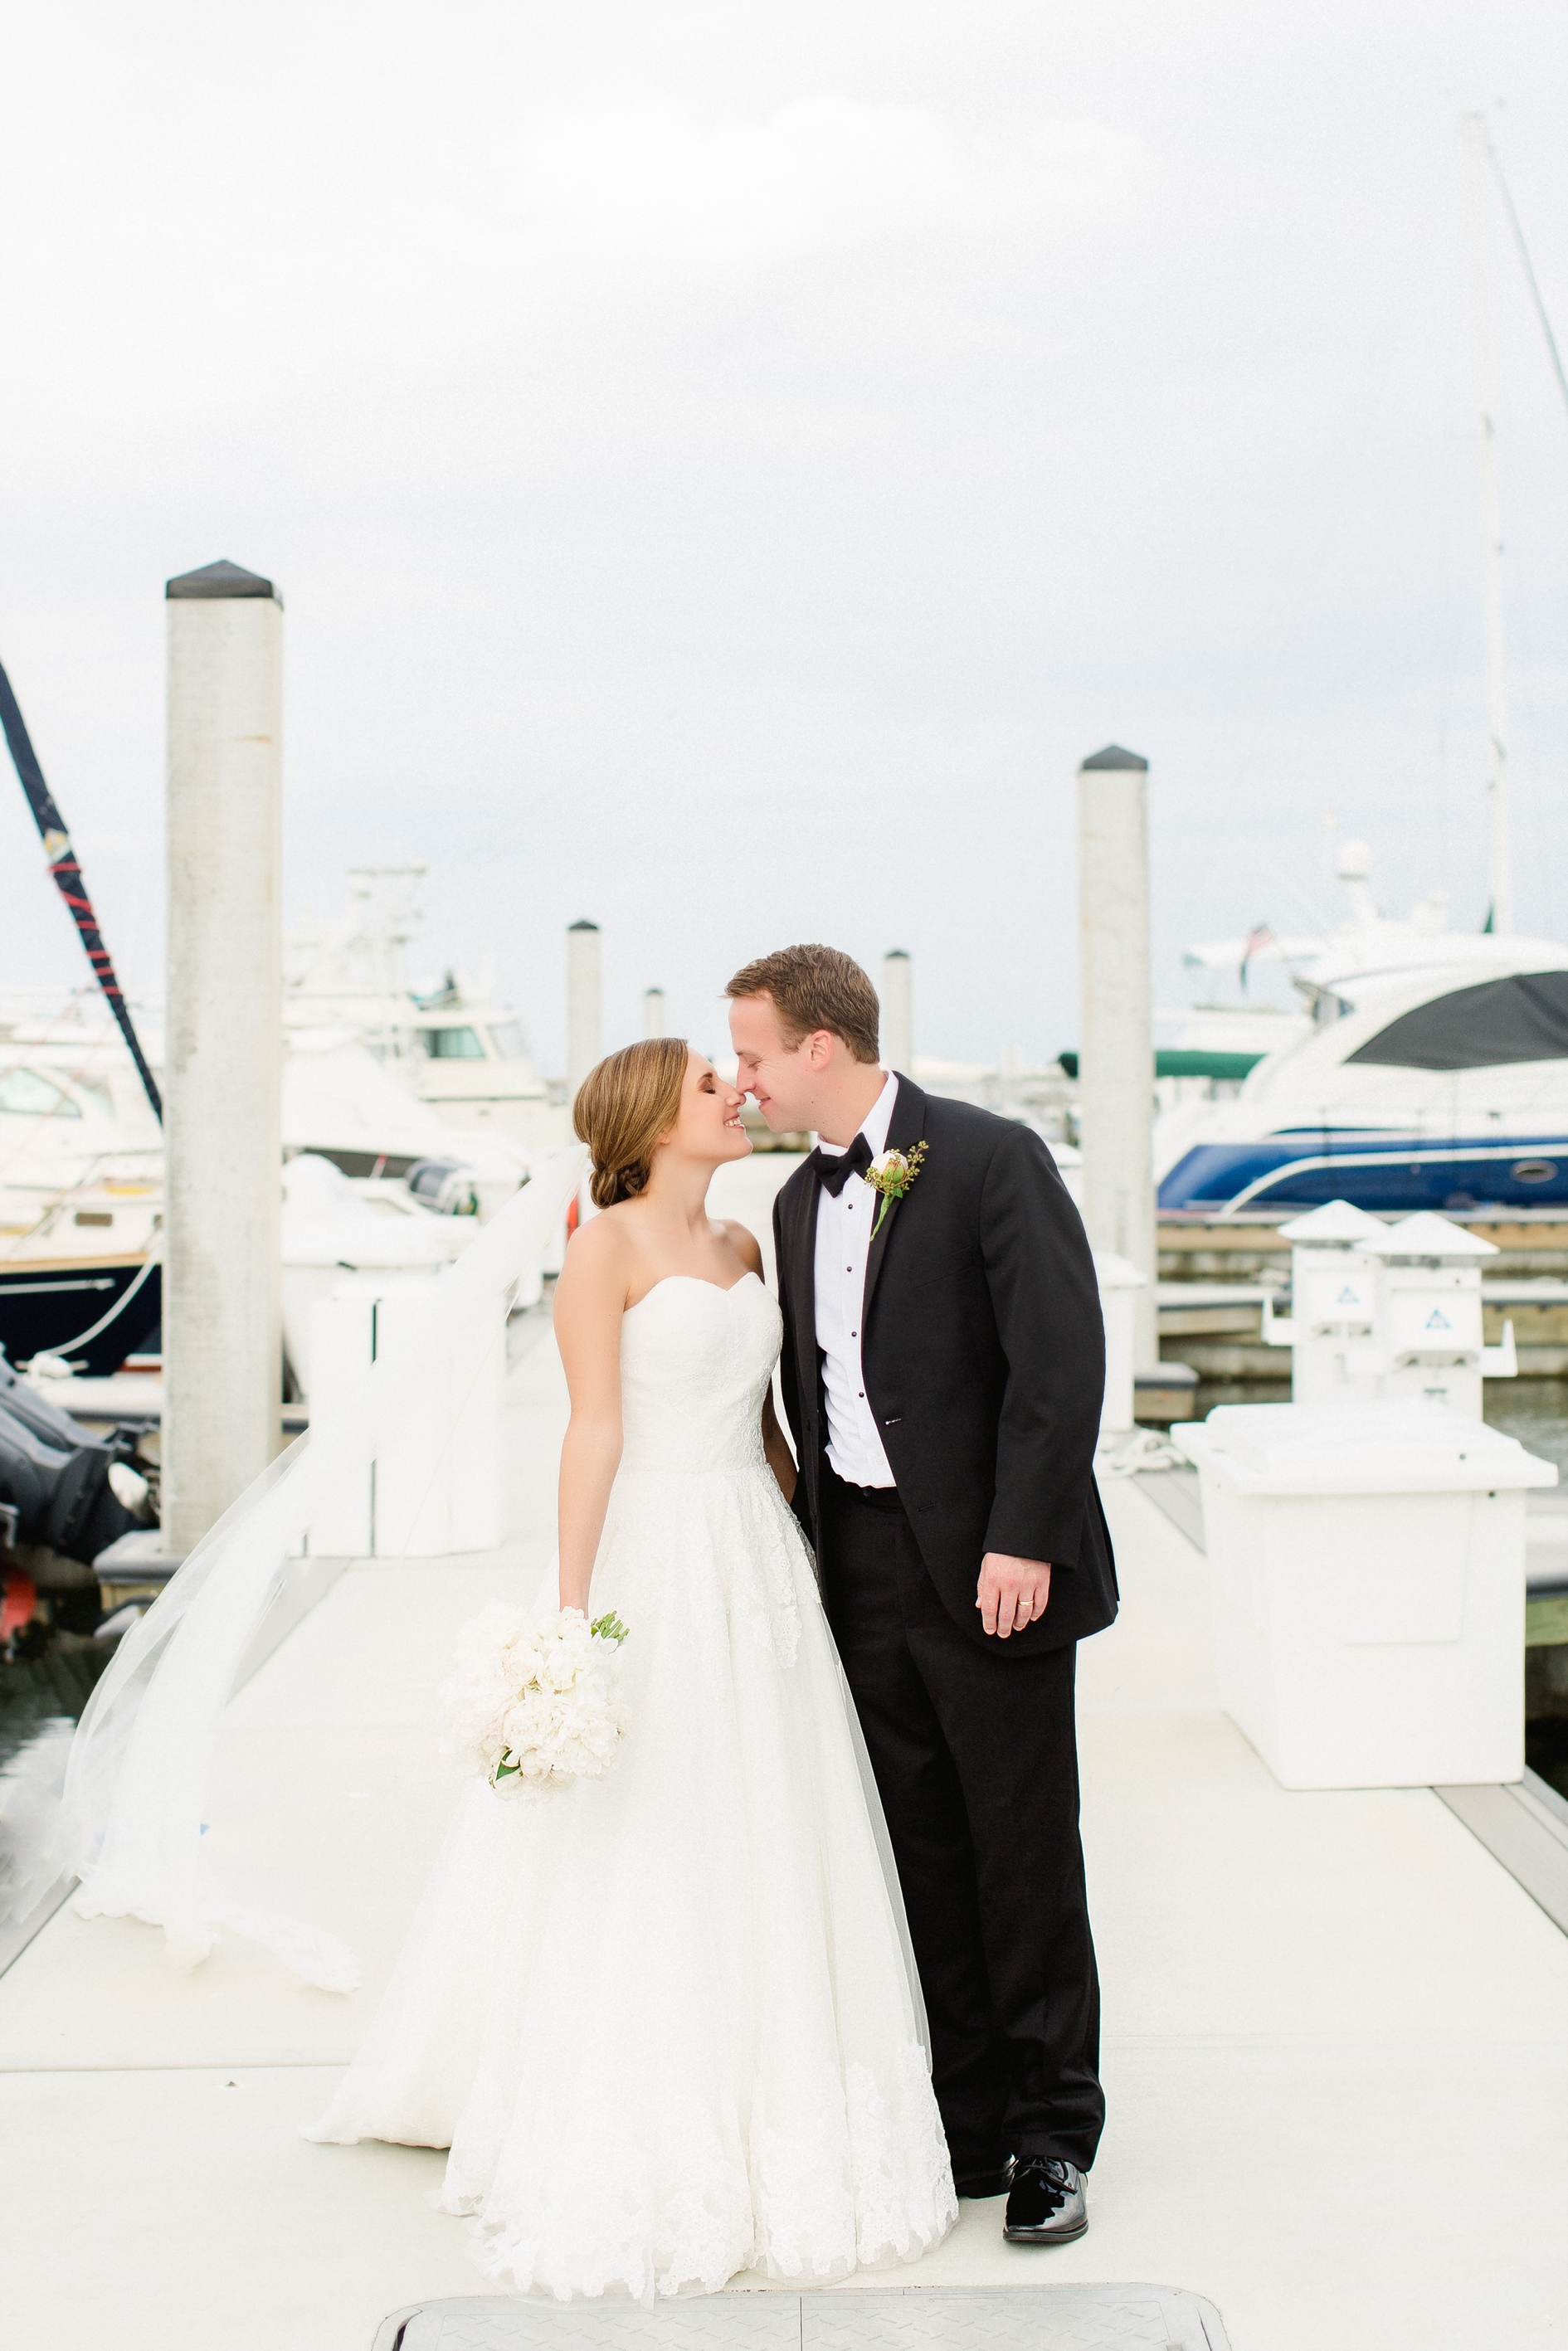 Tampa Yacht Club Wedding | © Ailyn La Torre Photography 2017